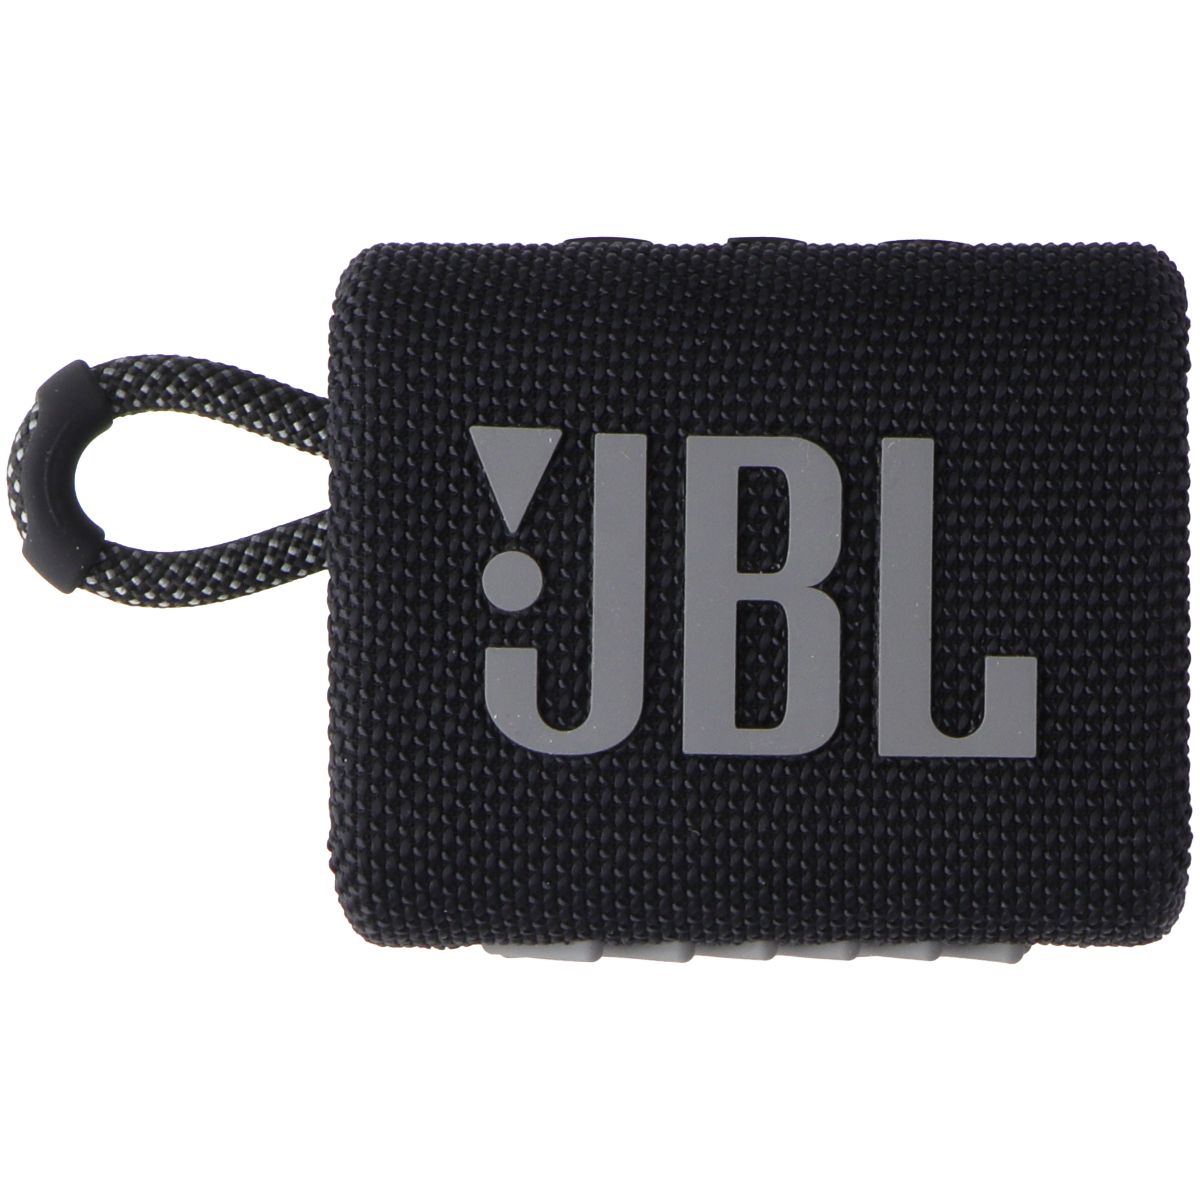 JBL Go 3 Portable Waterproof Speaker with Bluetooth - Black Cell Phone - Audio Docks & Speakers JBL    - Simple Cell Bulk Wholesale Pricing - USA Seller